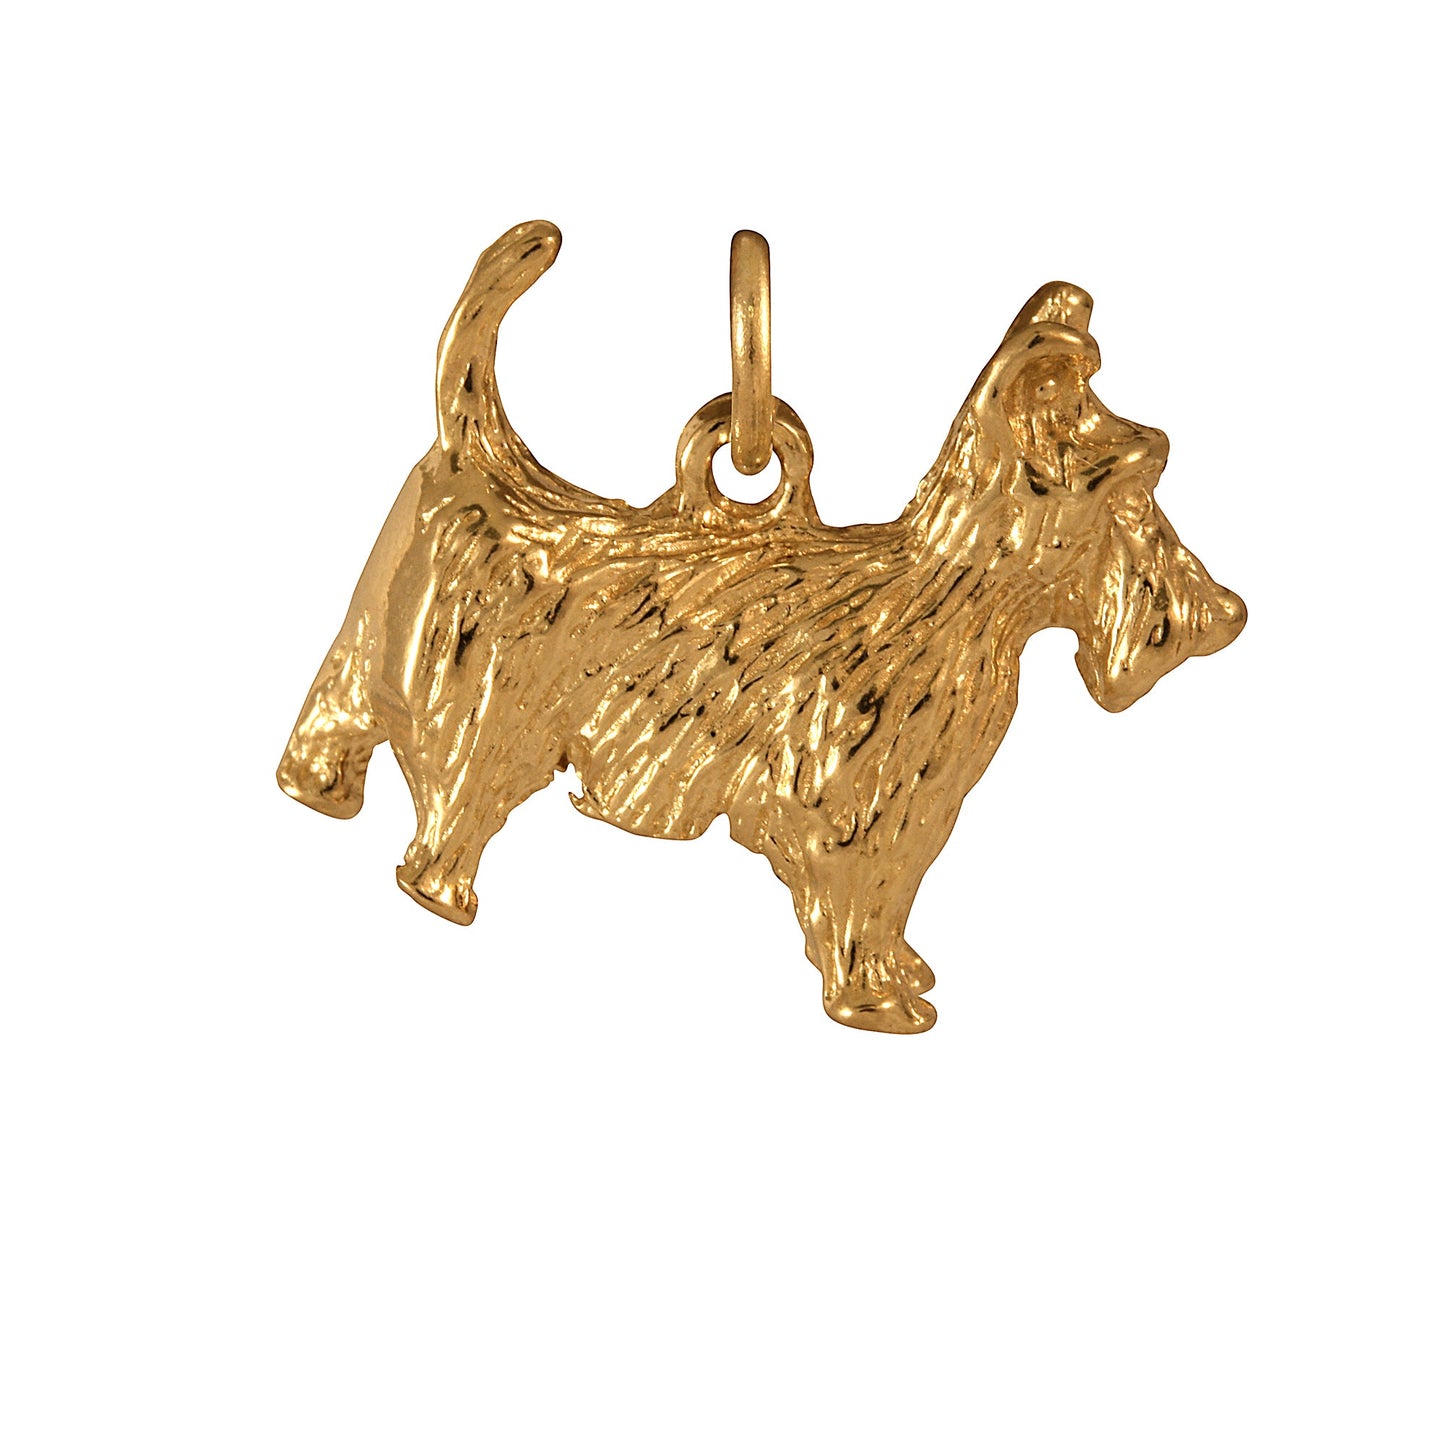 9ct Gold Scottie Dog Charm